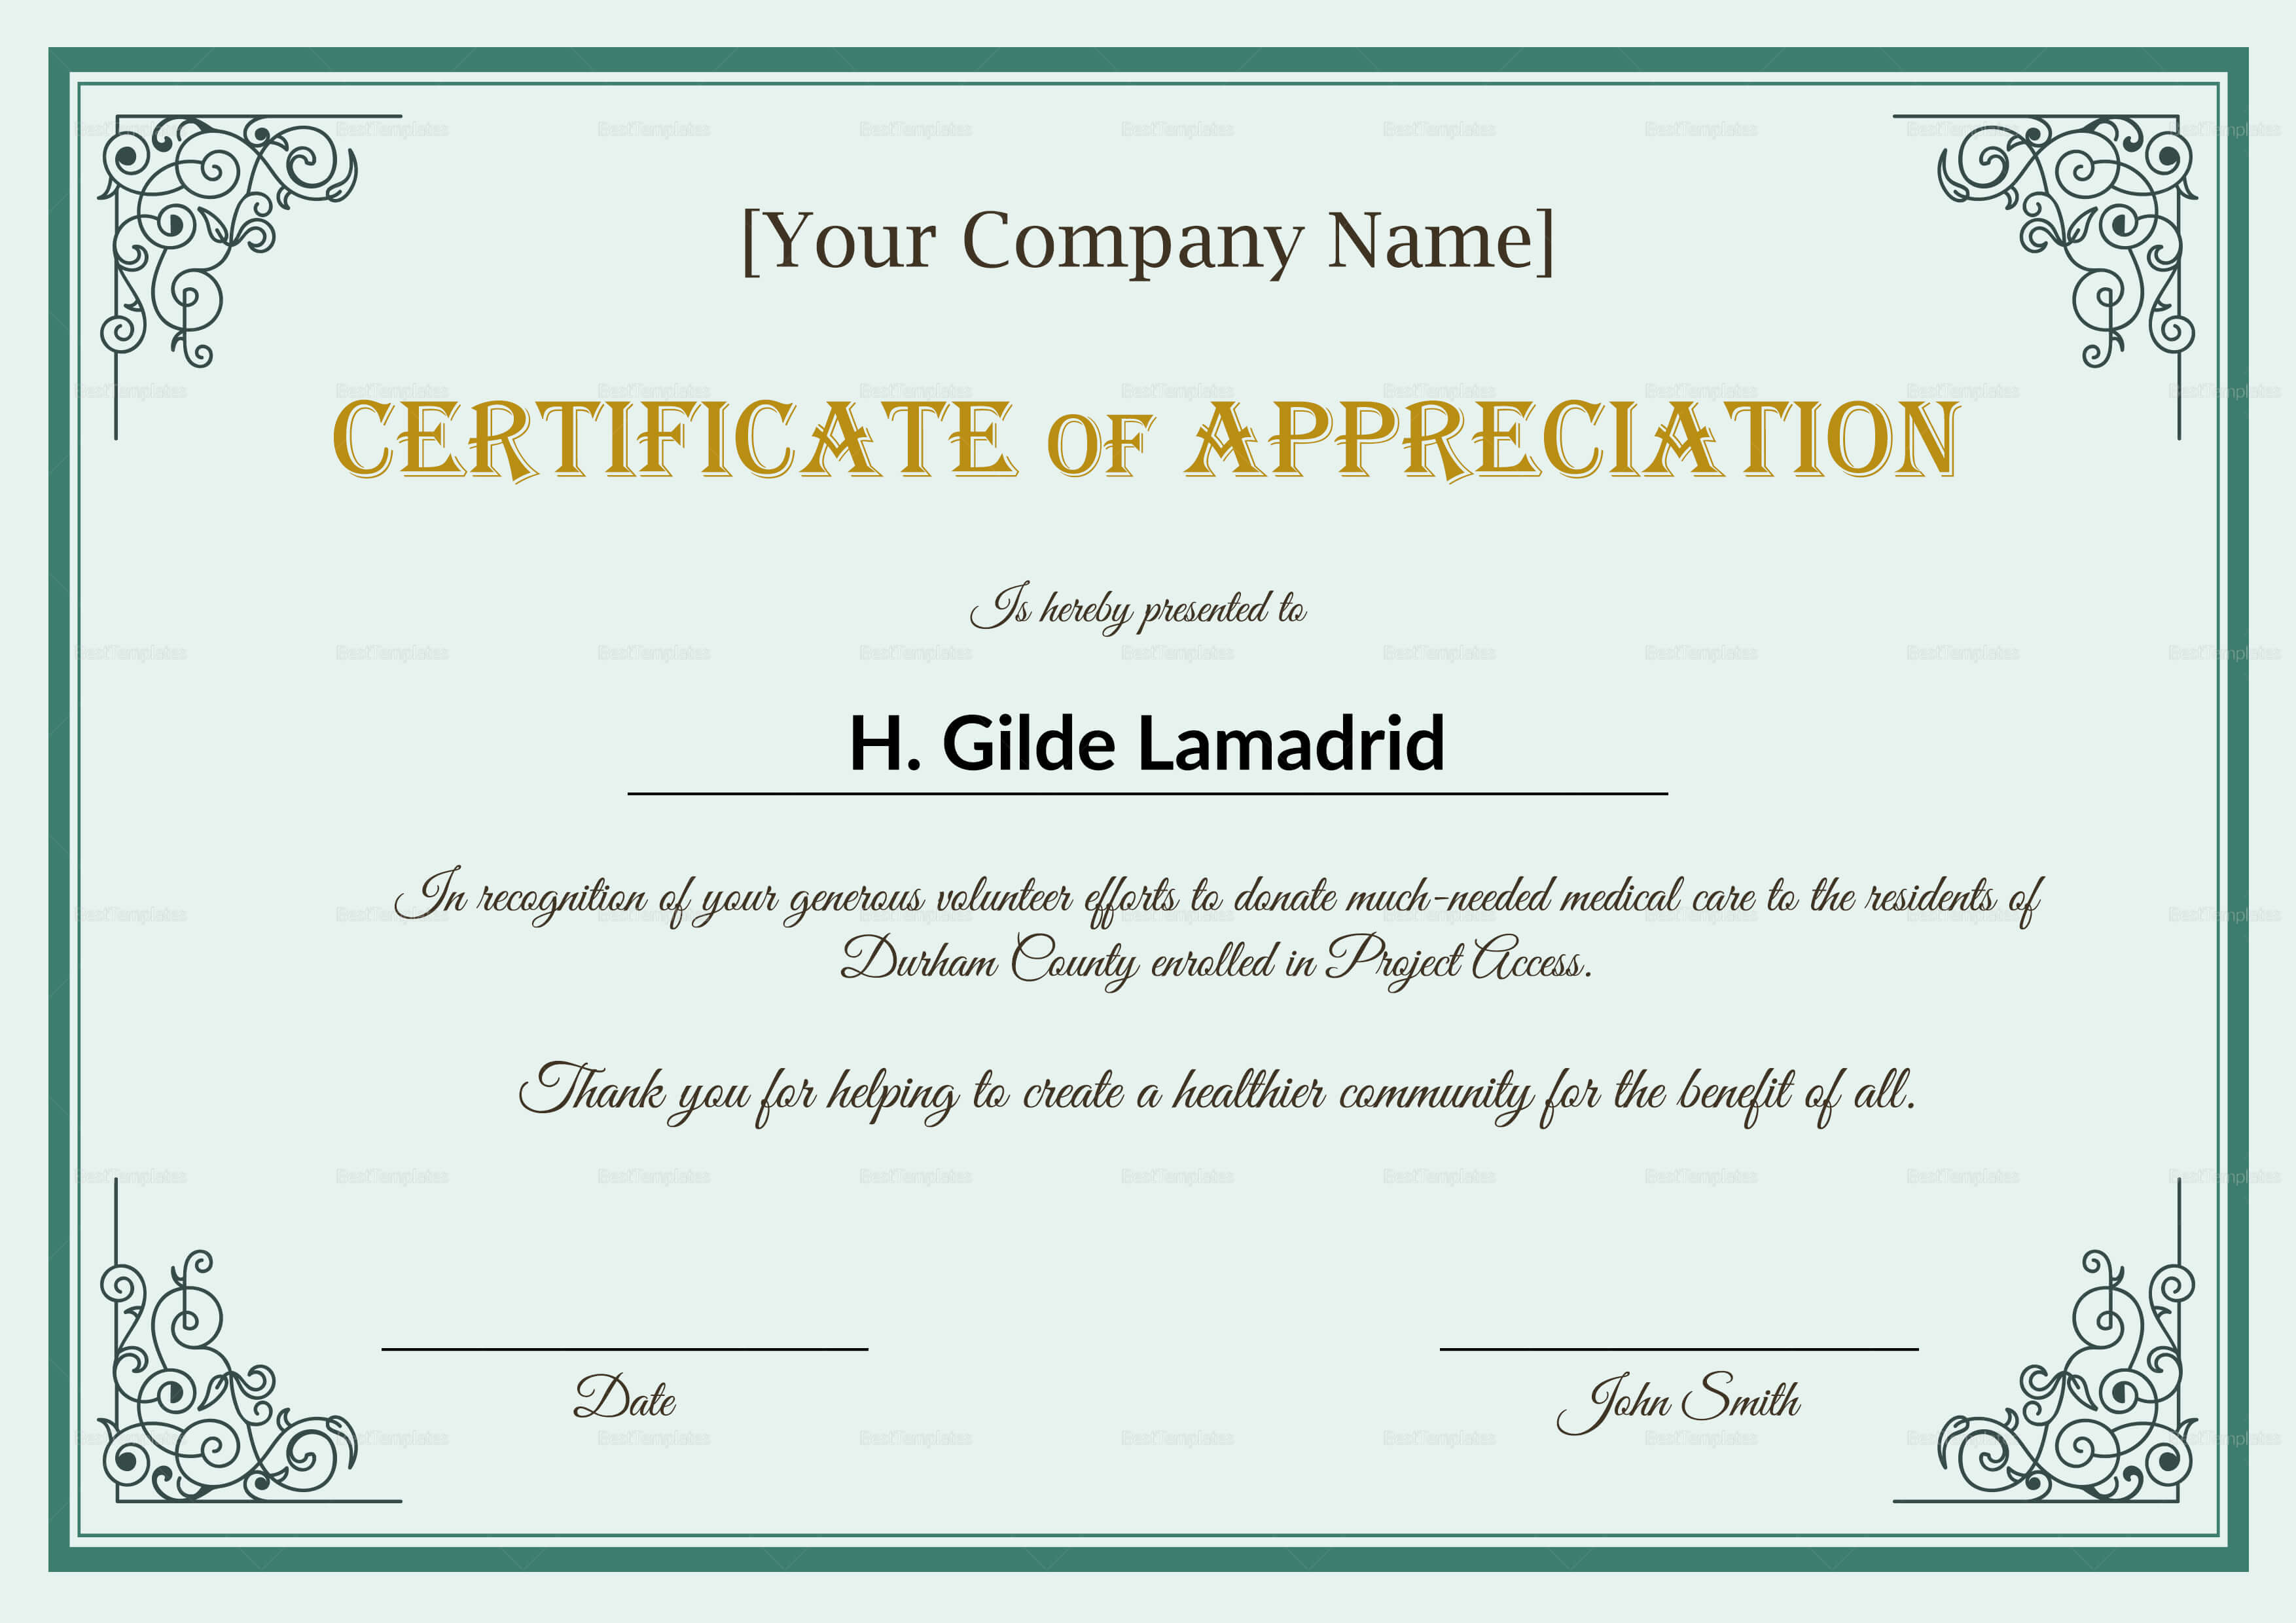 Company Employee Appreciation Certificate Template With Regard To Certificates Of Appreciation Template